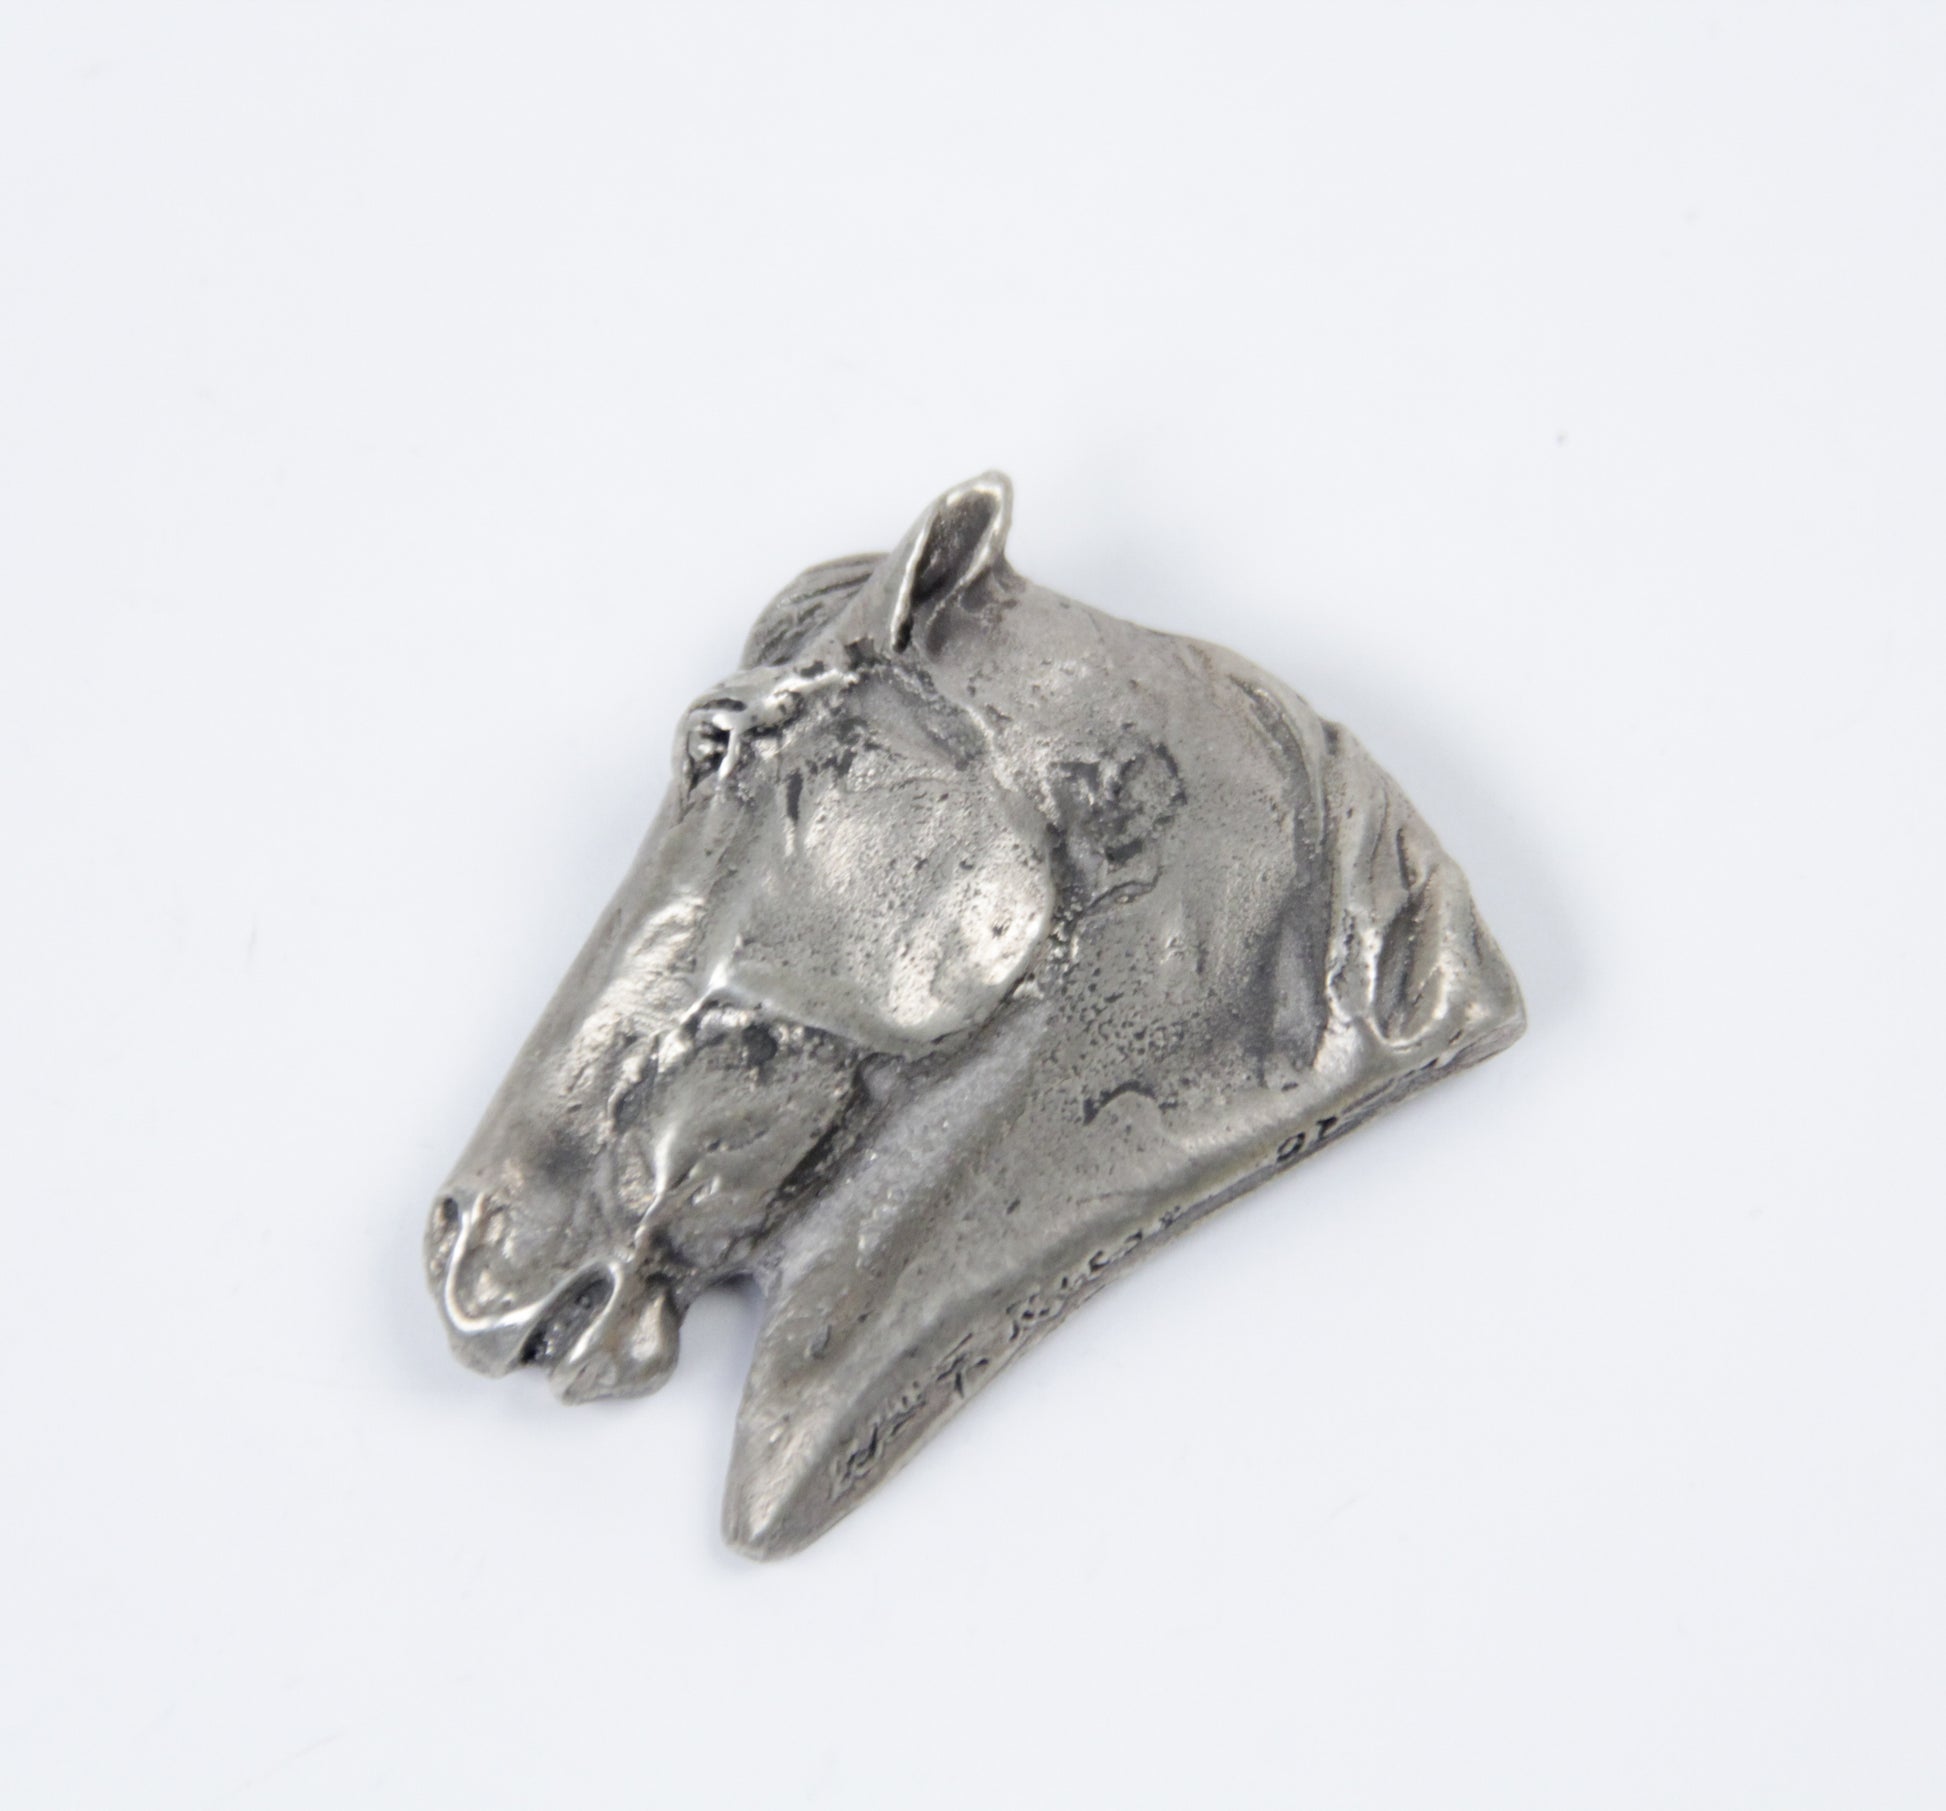 2002 prix de west collector's bolo tie pin bronze or silver william reese sculptor